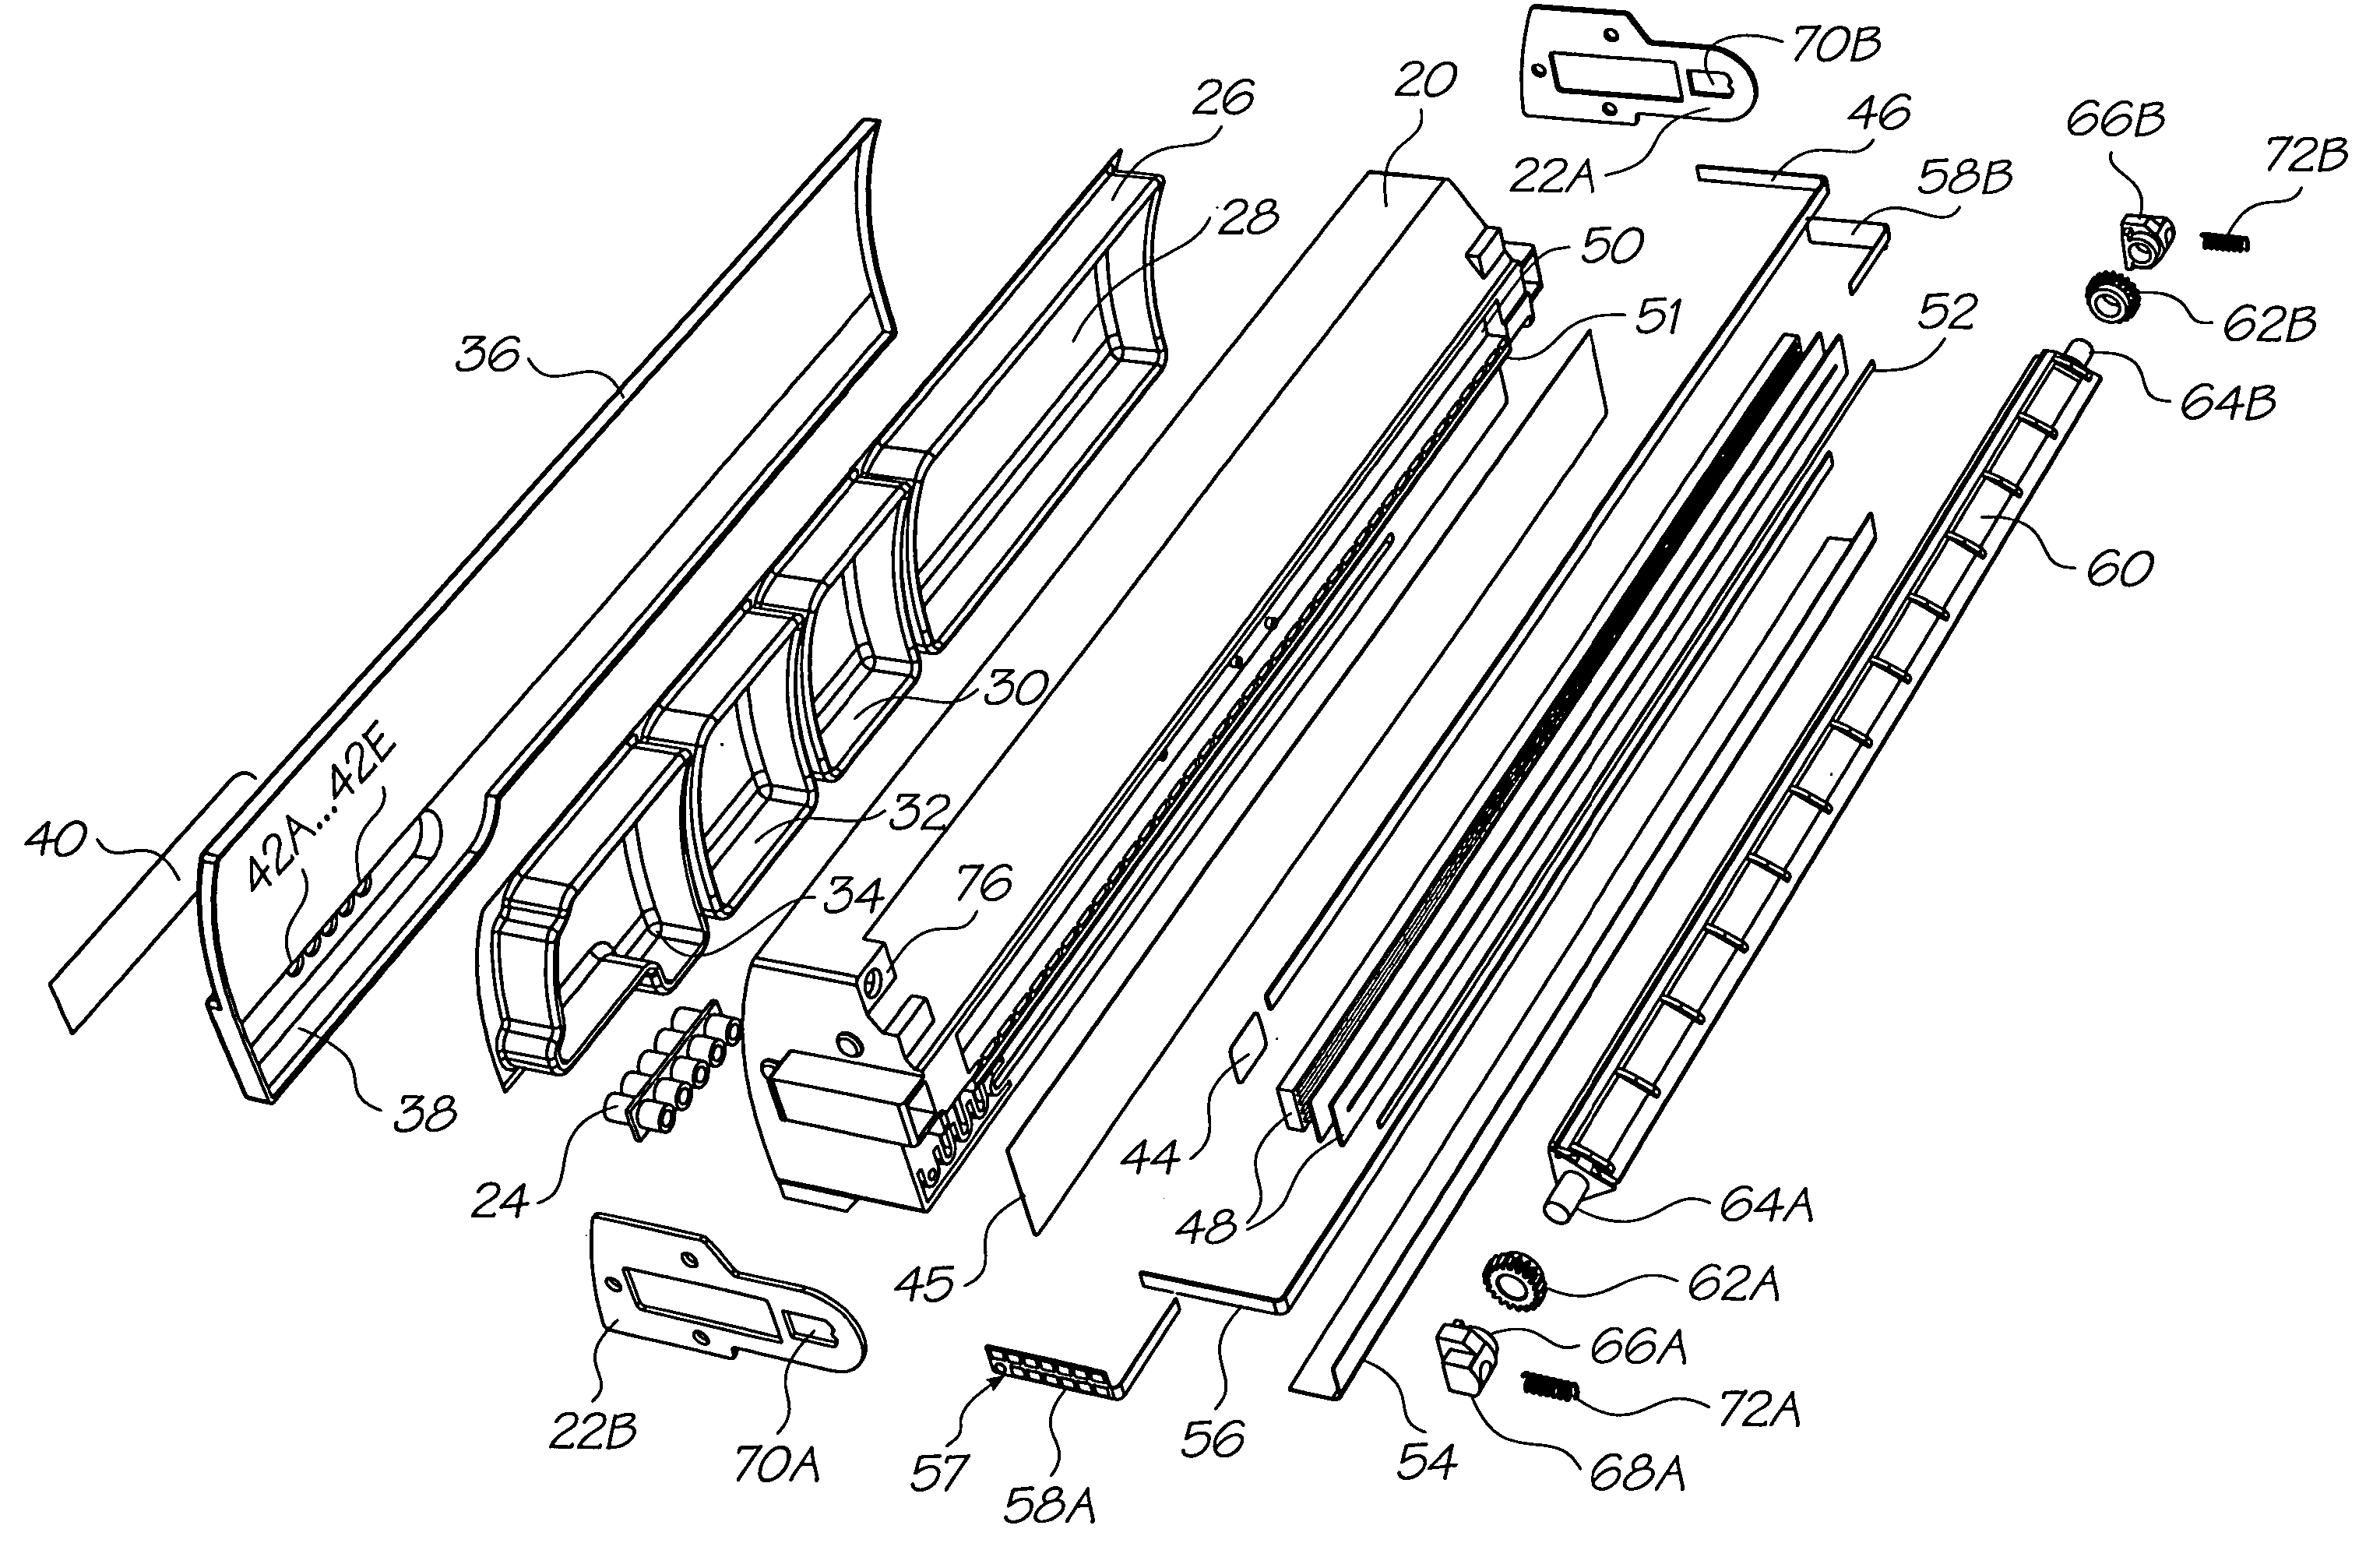 Inkjet printer cartridge with integral shield